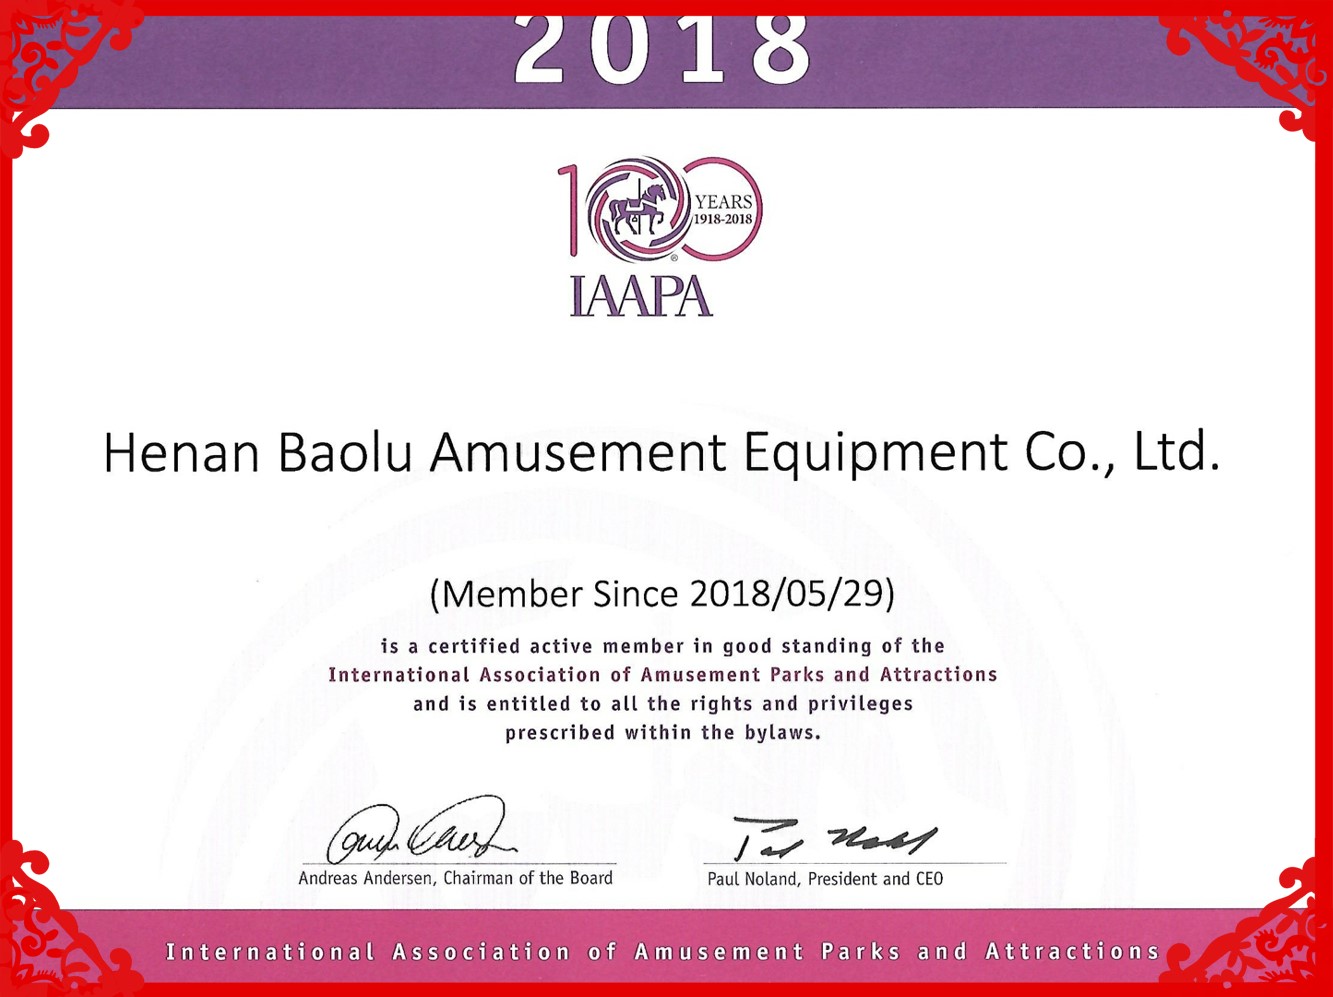 Henan Baolu Amusement Equipment Co., Ltd